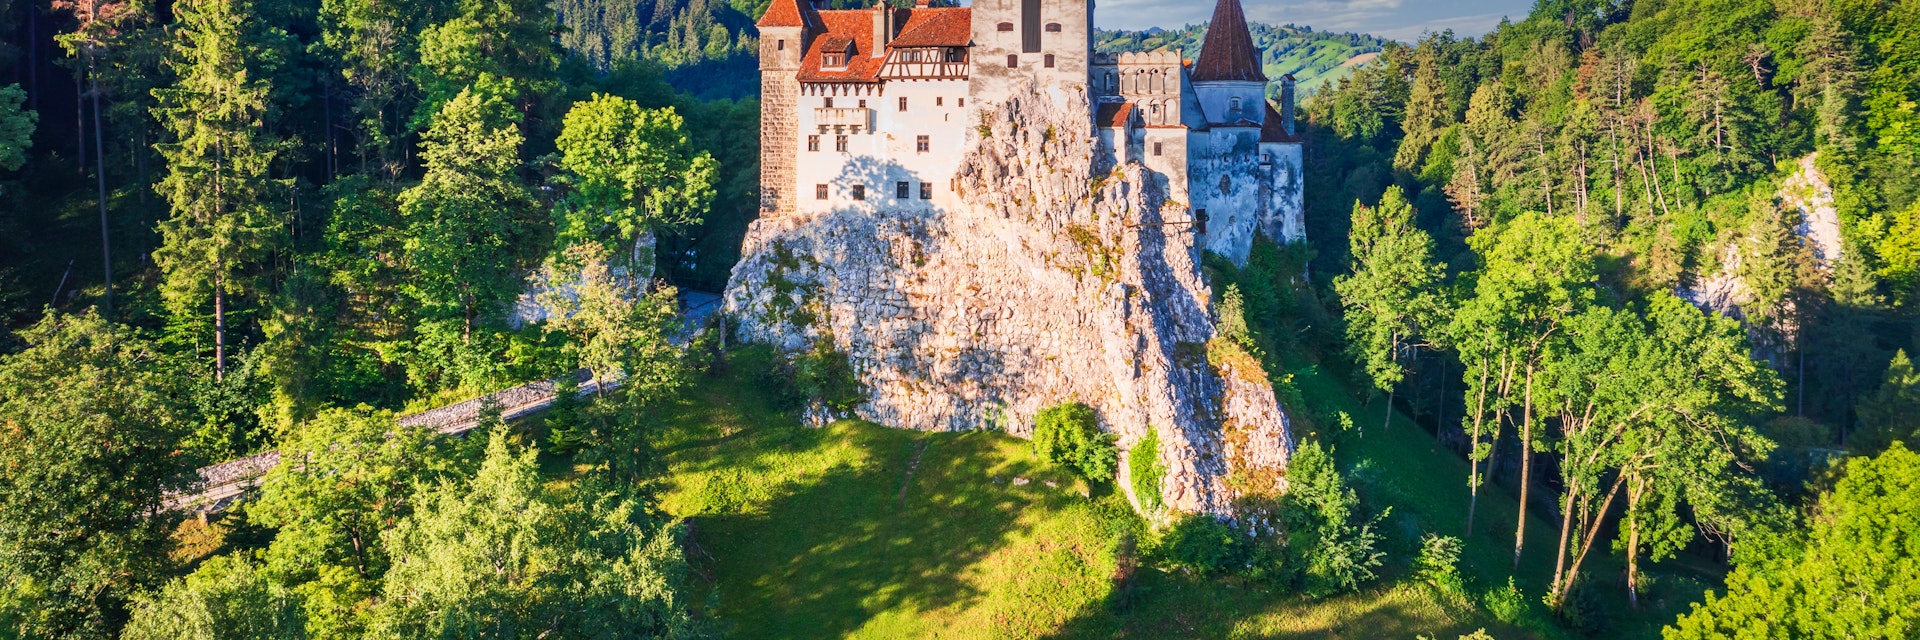 Bran Castle, Romania - August 2021. Place of Dracula in Transylvania, Carpathian Mountains, romanian  famous destination in Eastern Europe